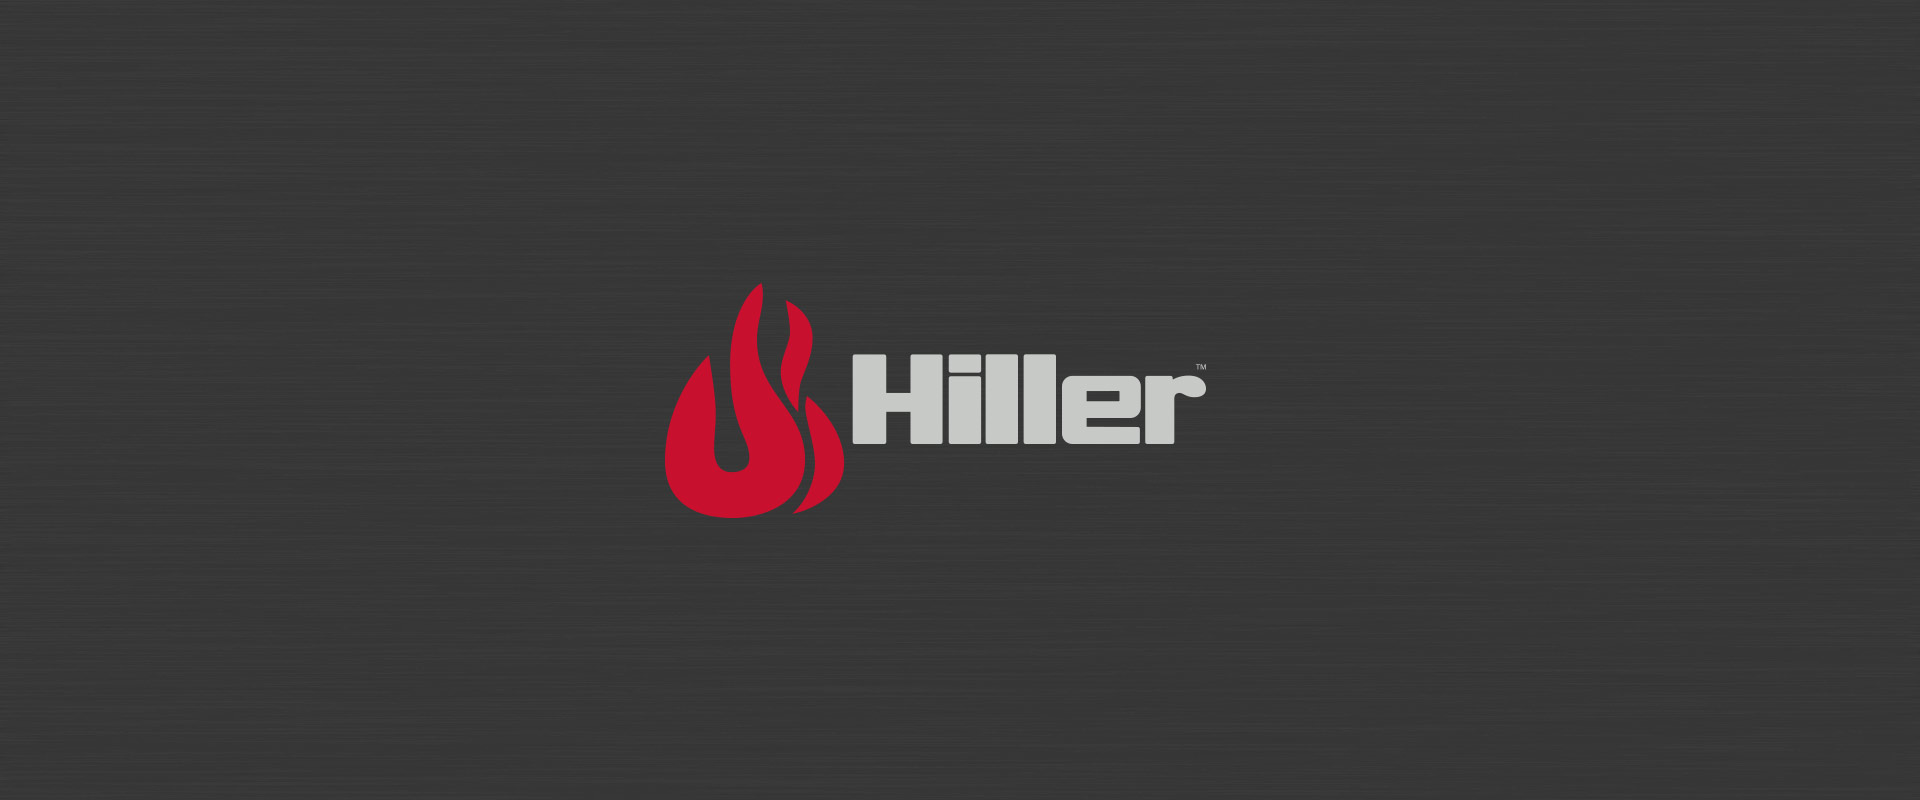 Hiller Banner Logo